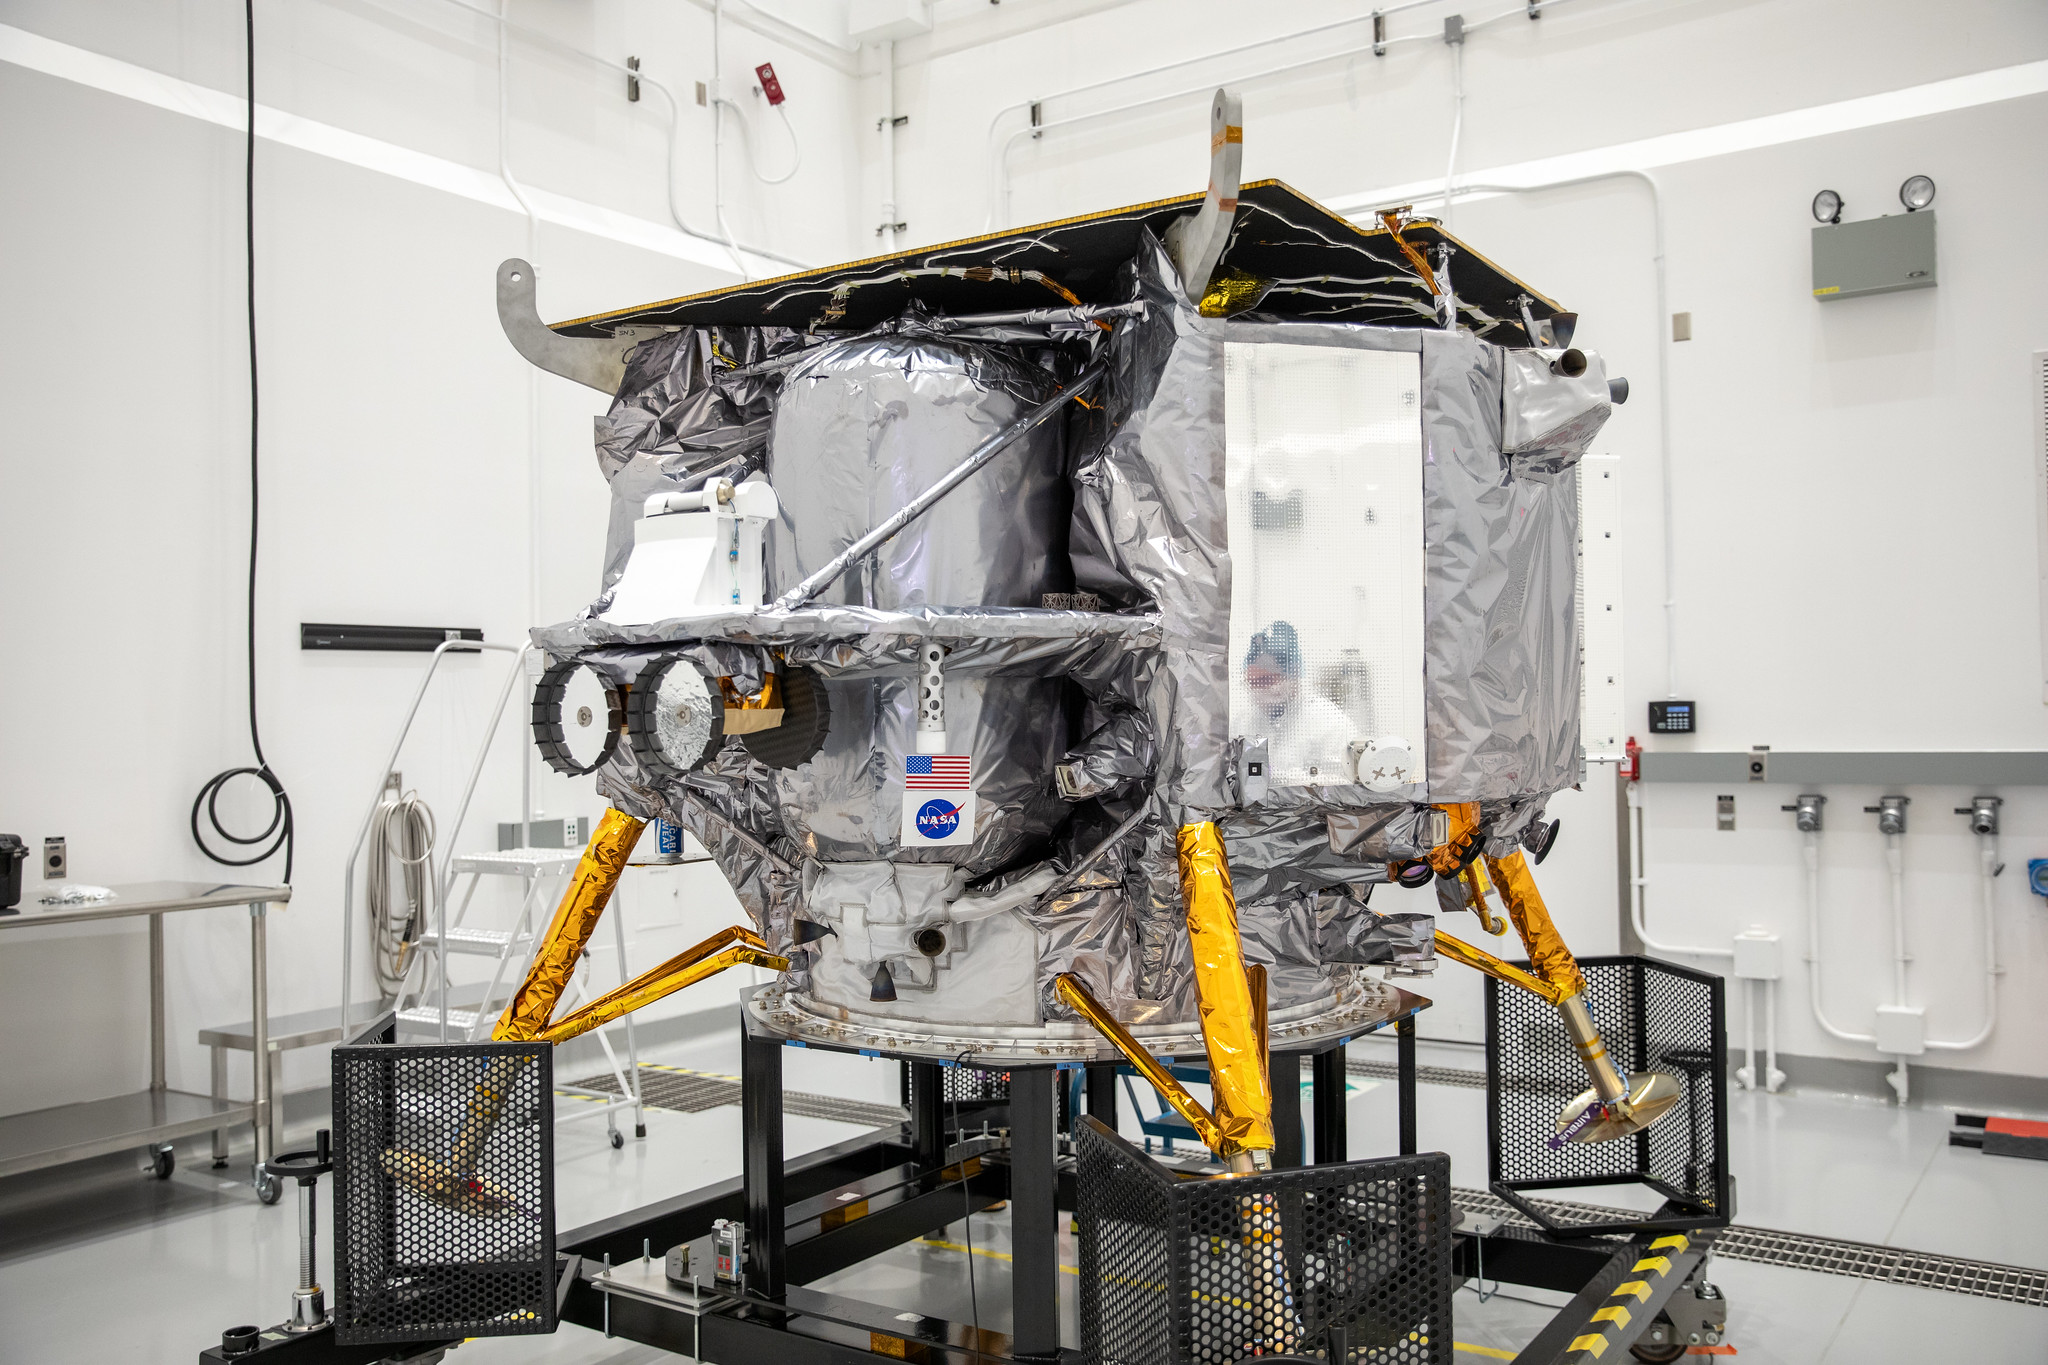 NASA in Silicon Valley Live - Moon 2024: Countdown to Arrival - NASA